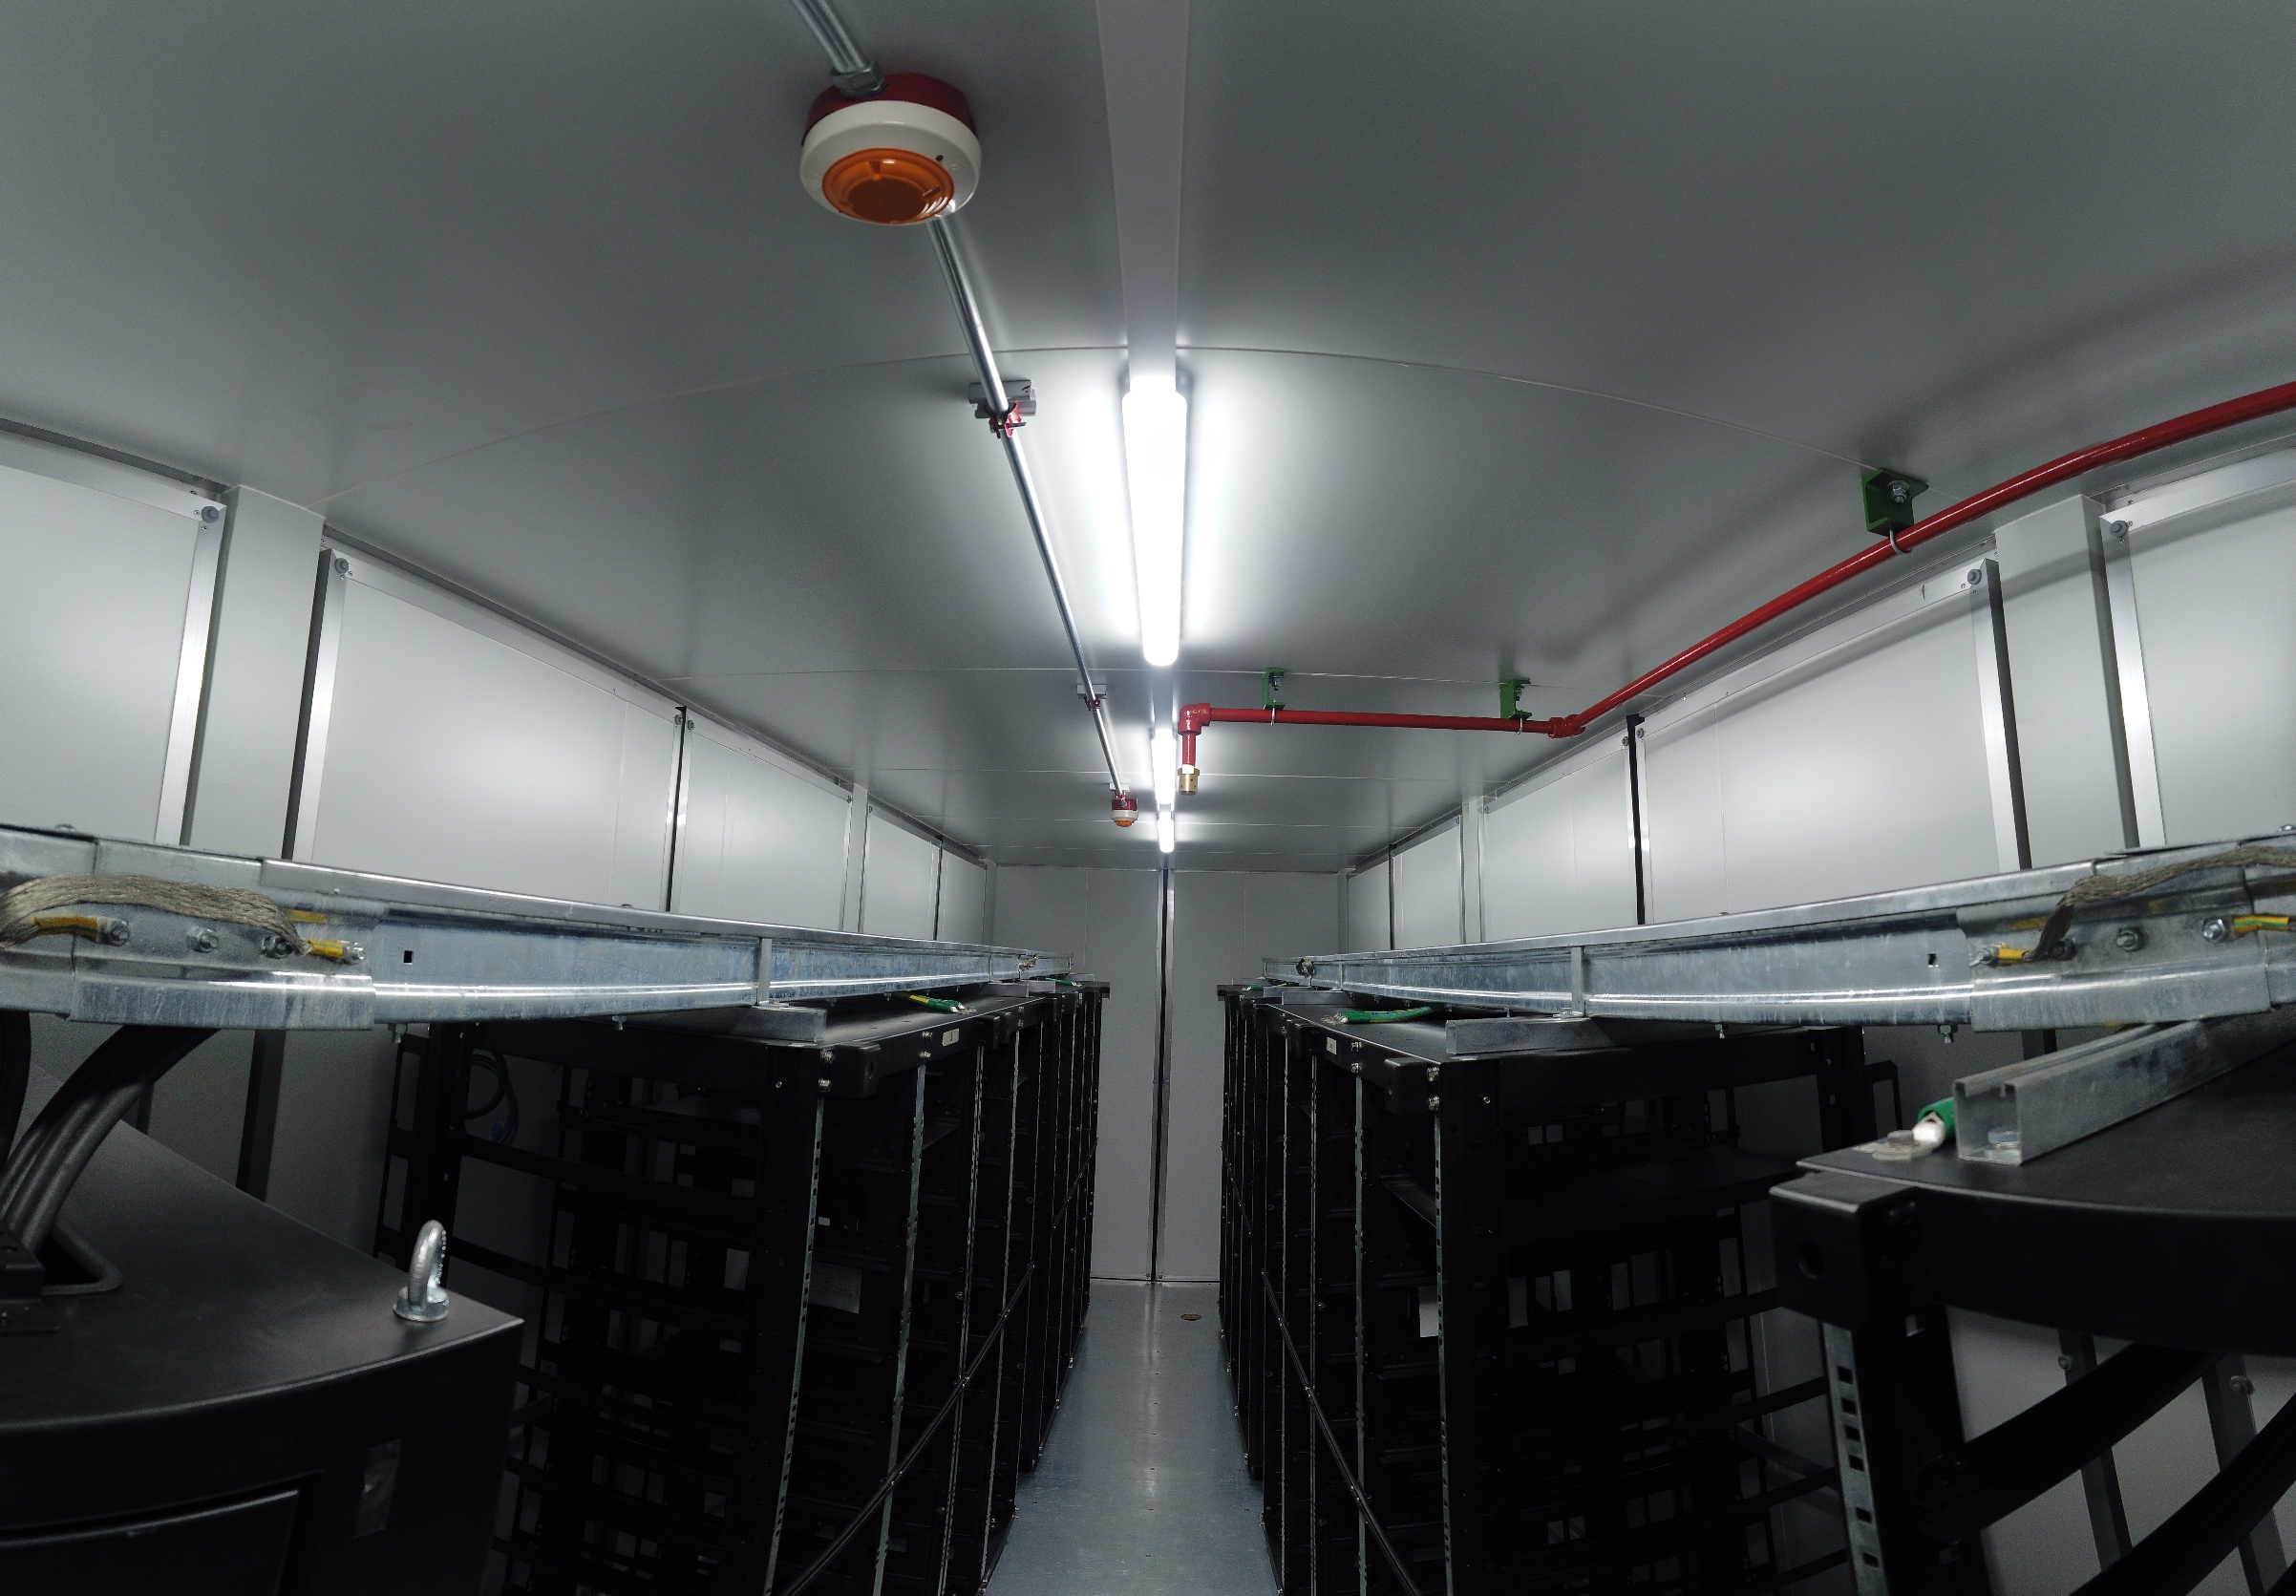 GPSC - PTTGC 1.5MWh Energy Storage System